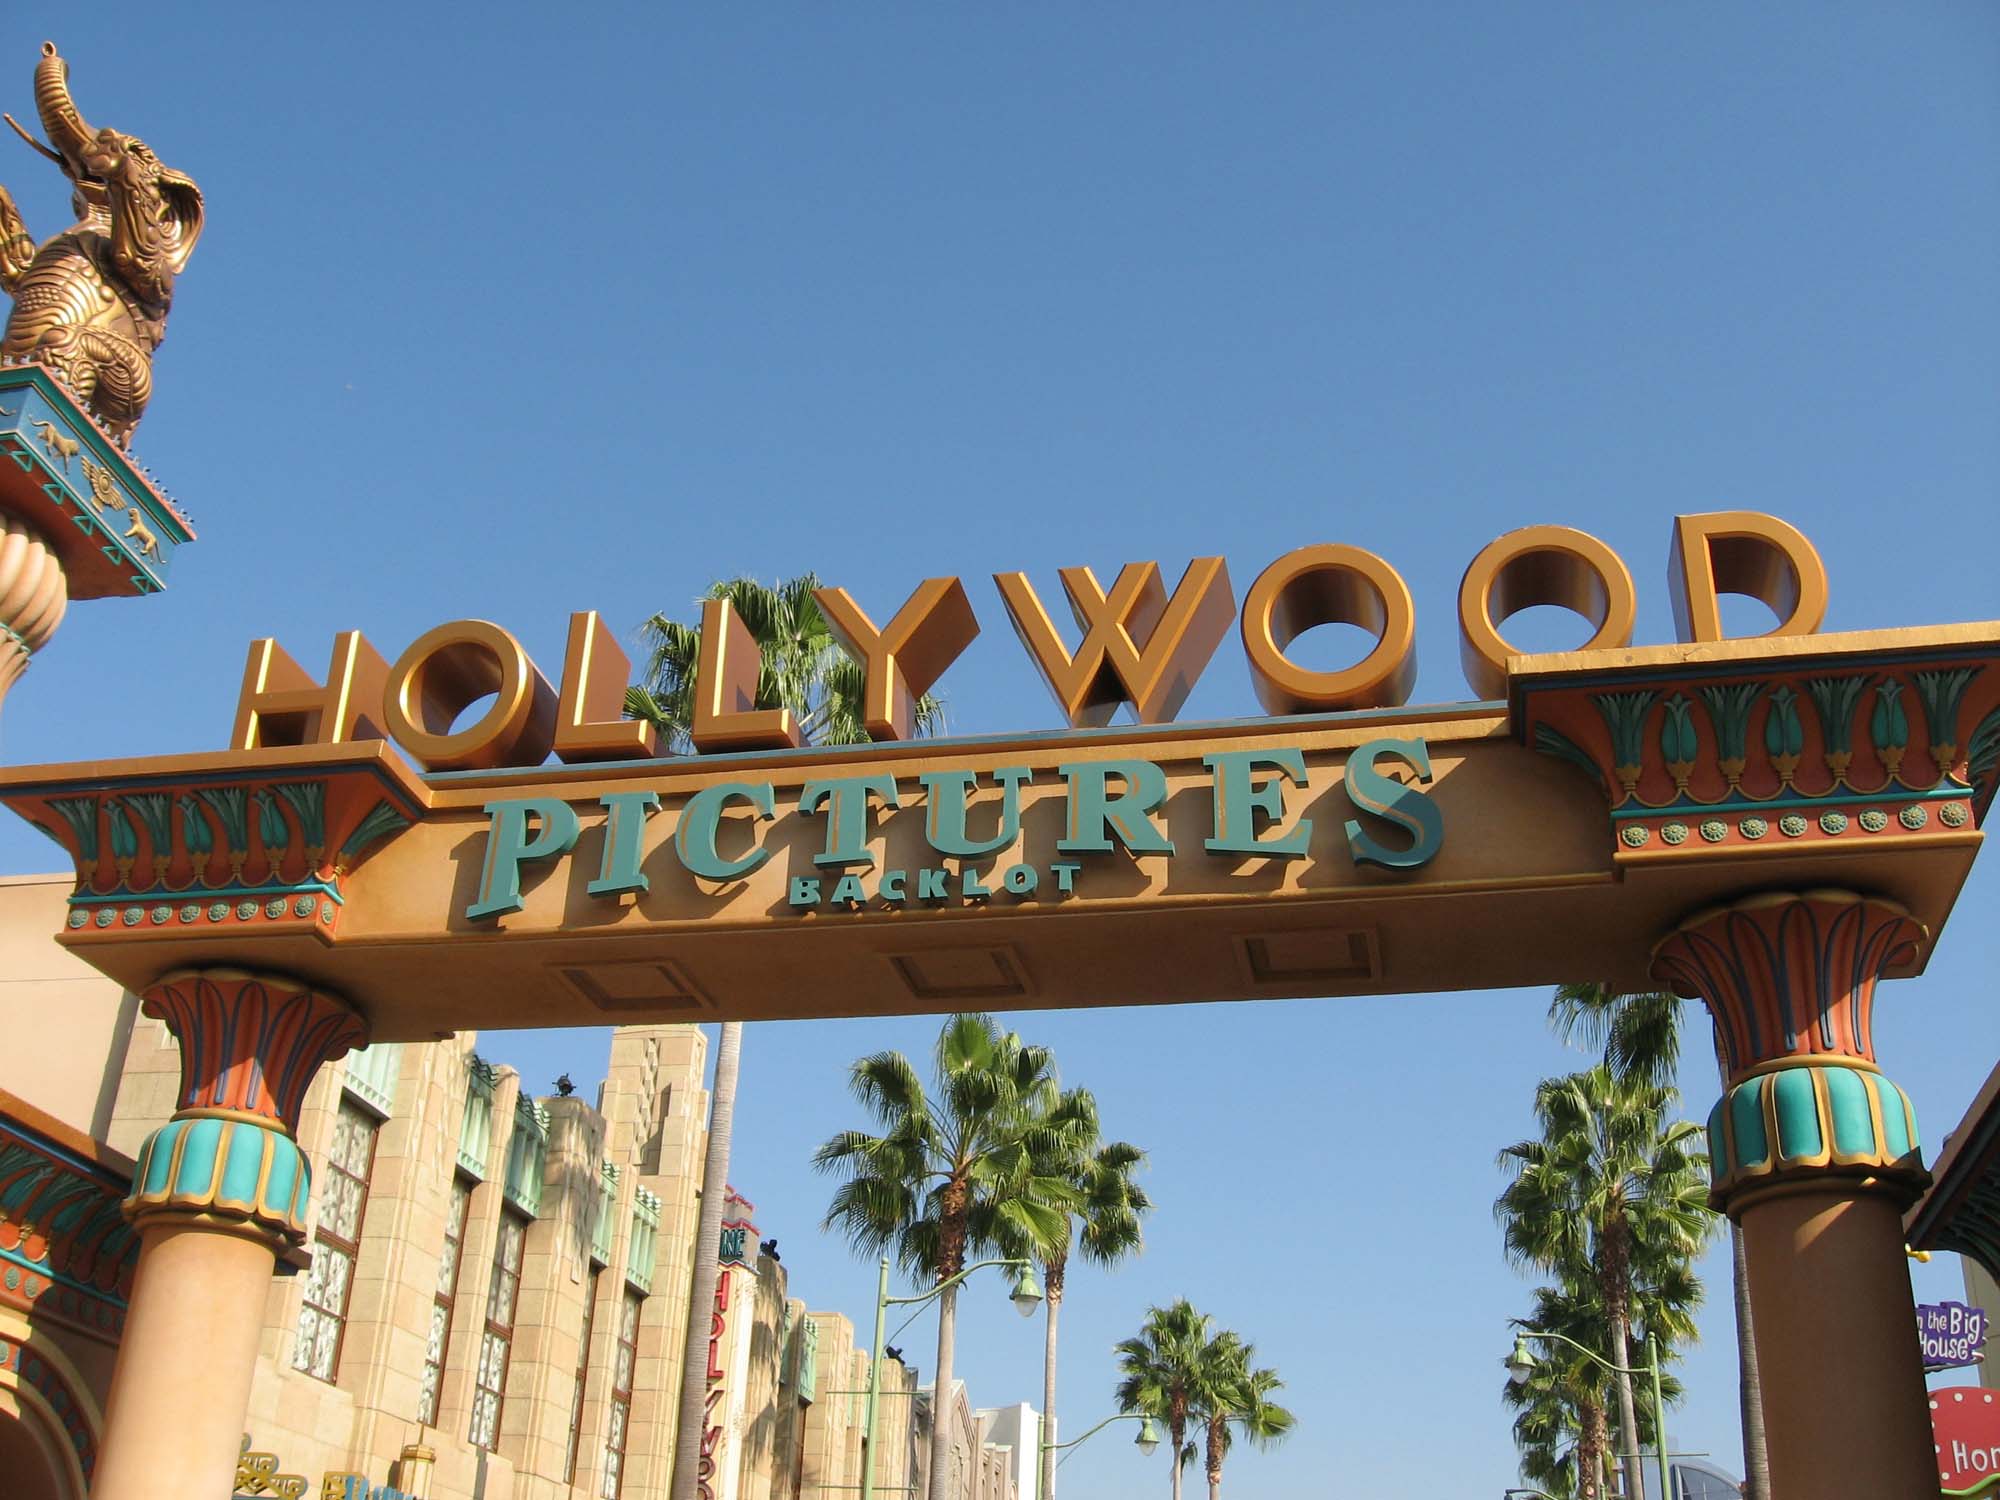 Disney's California Adventure - Hollywood Backlot entrance